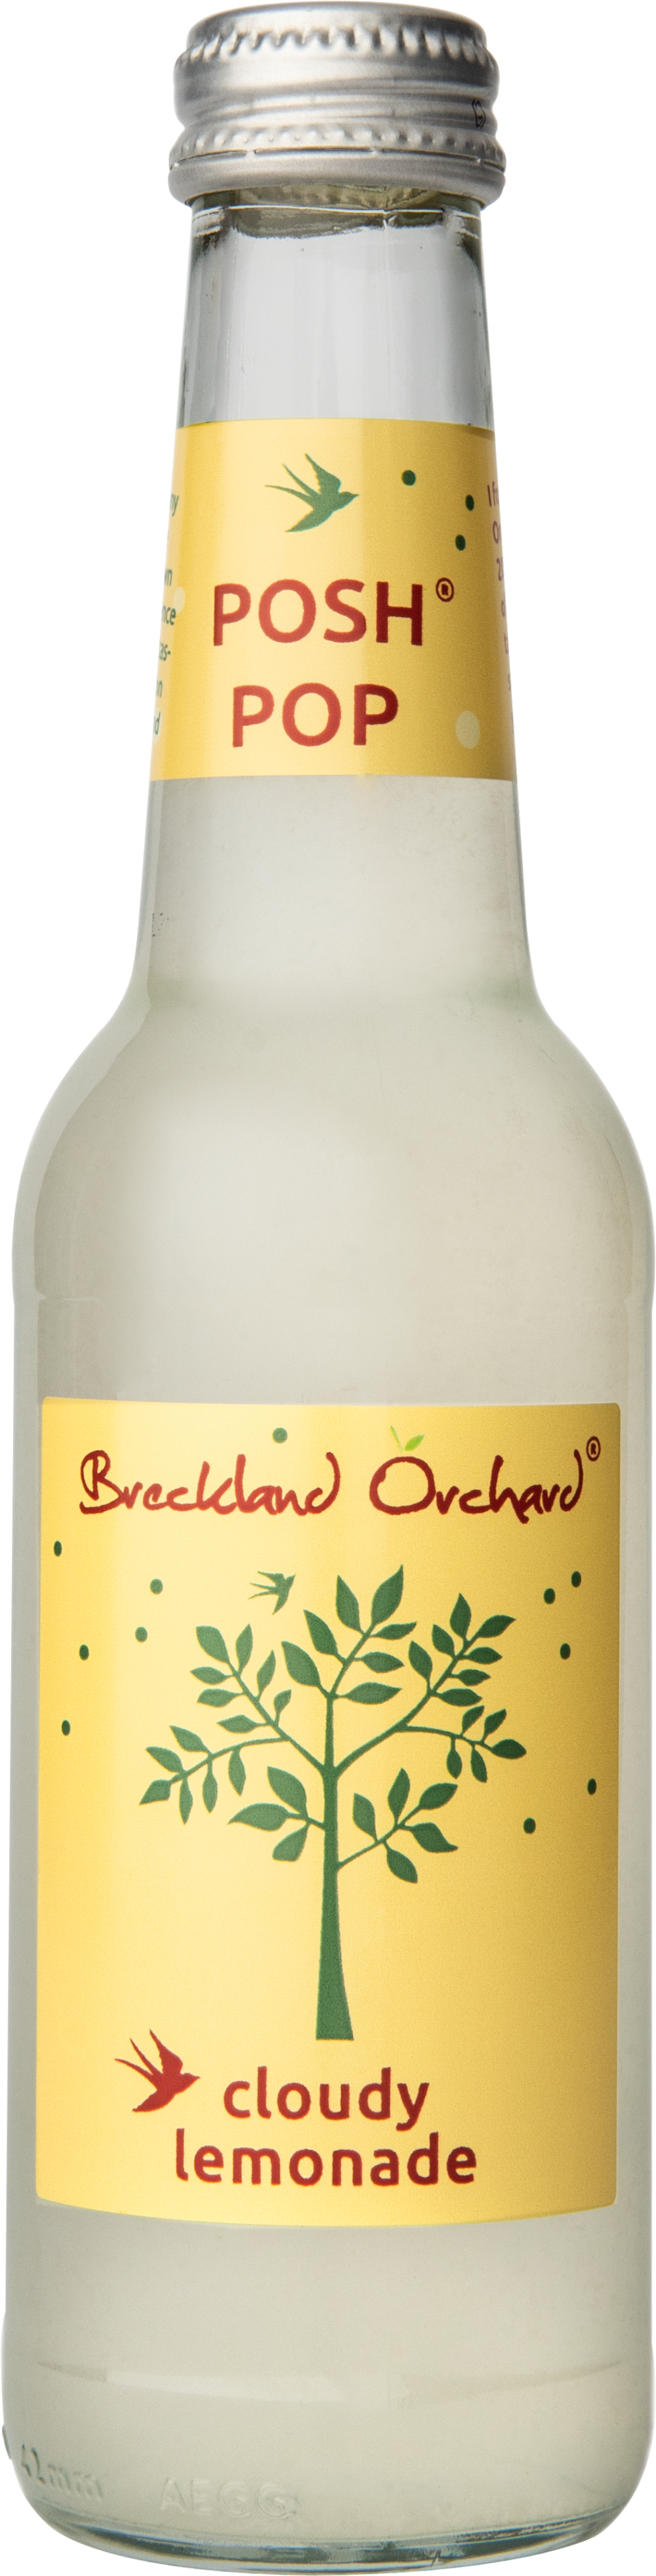 BRECKLAND ORCHARD Posh Pop - Cloudy Lemonade 275ml